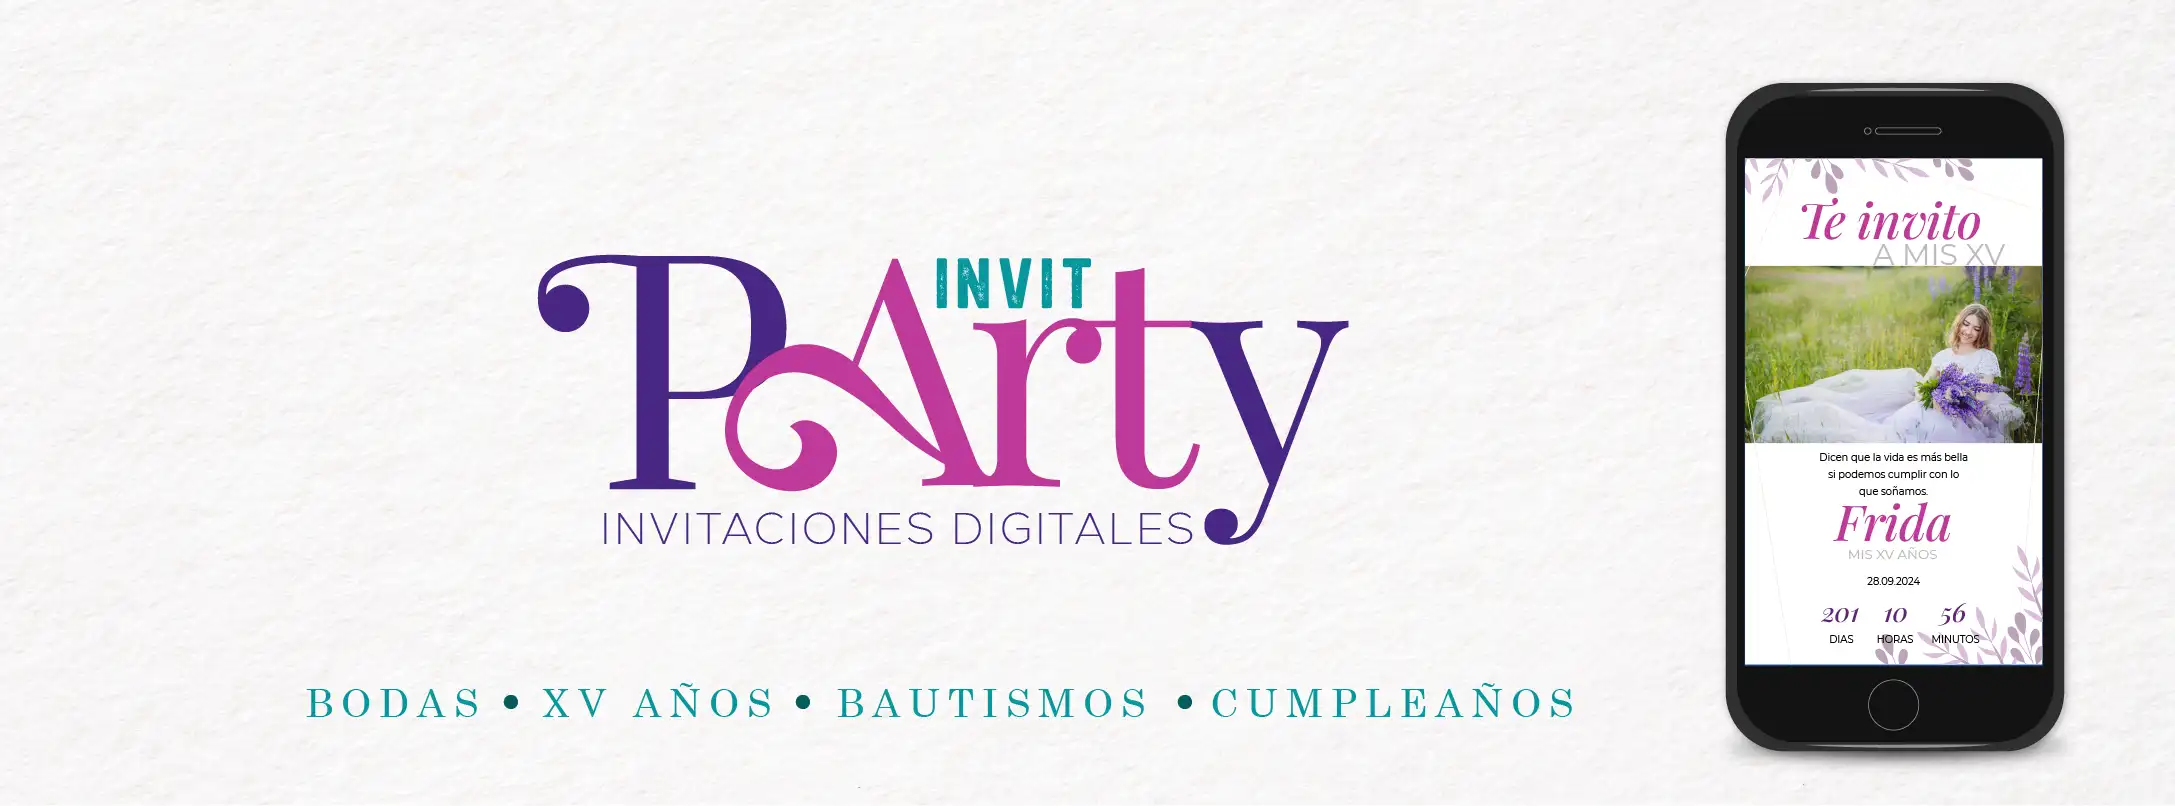 Invitaciones Digitales Mx invitparty.com